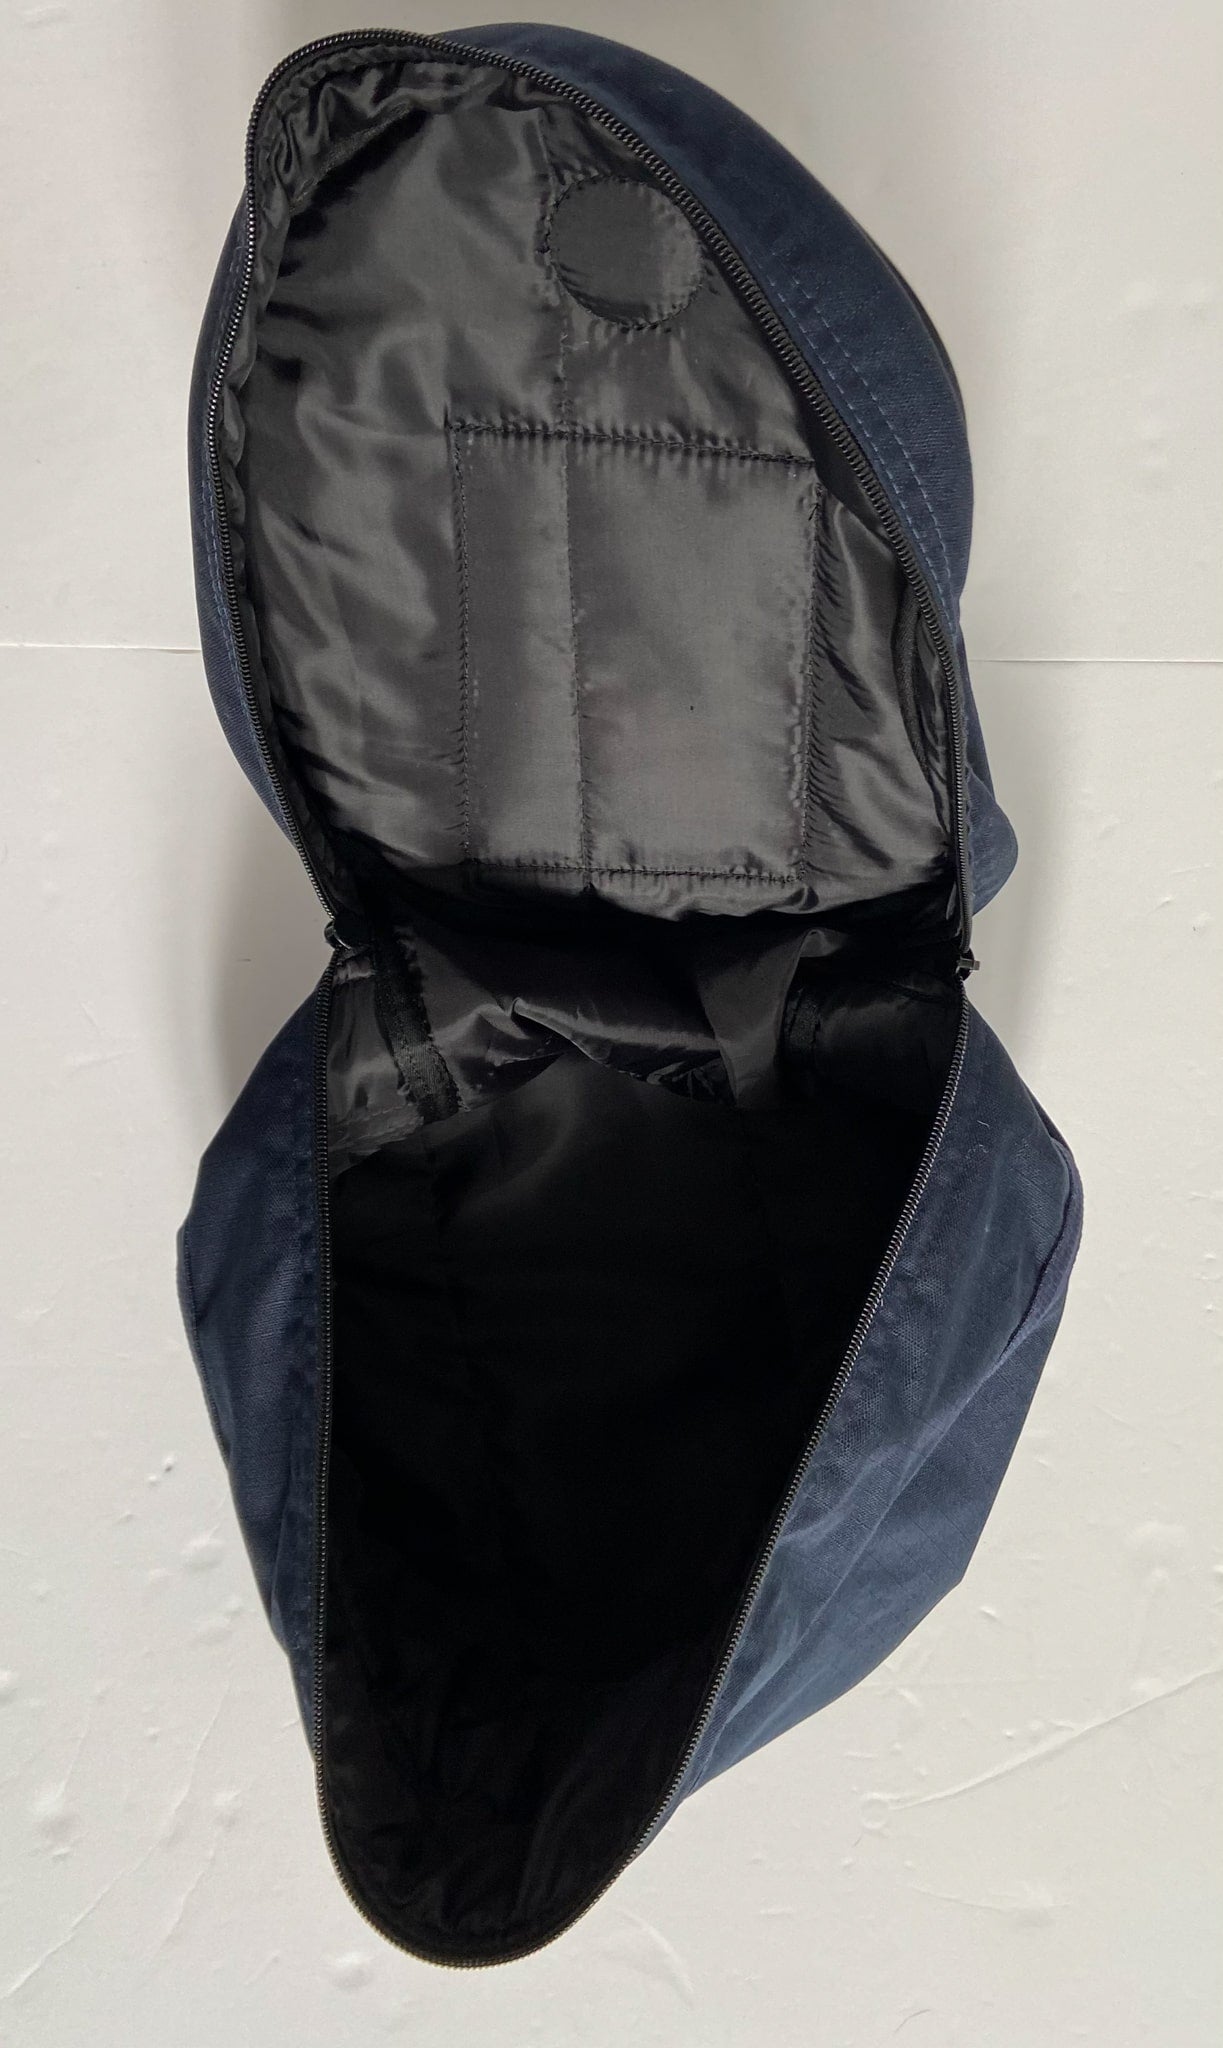 Centaur Helmet Bag - Navy - One Size